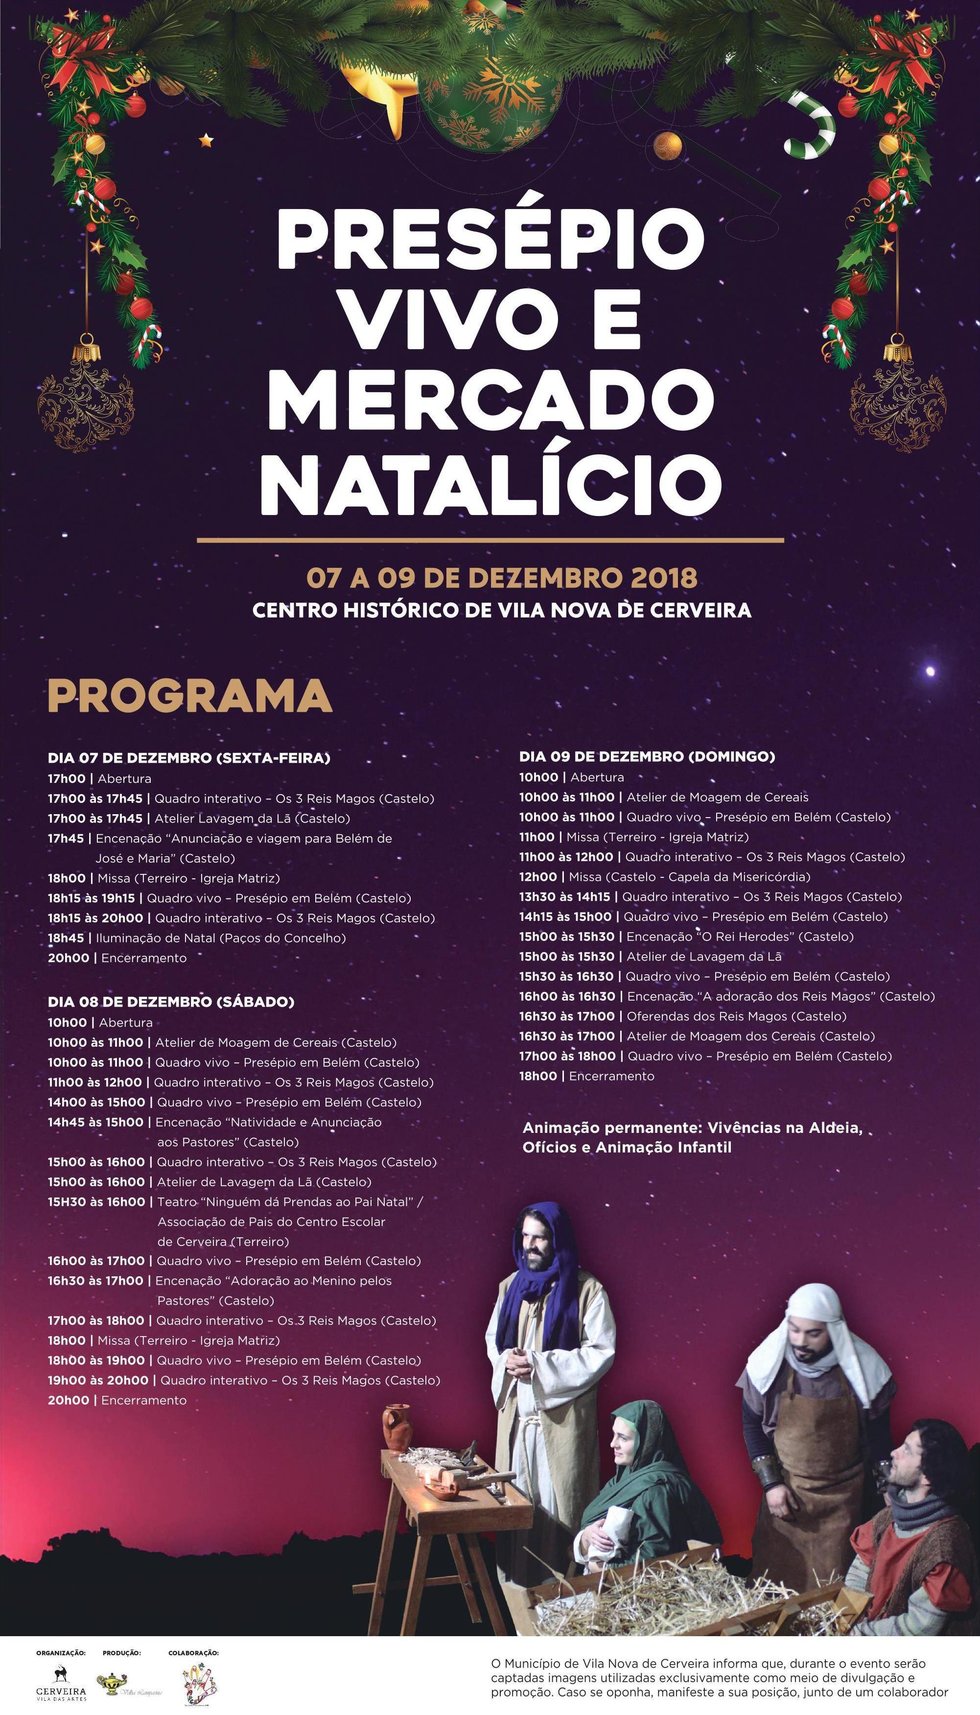 Mercado Natalicio 2018 - Programa